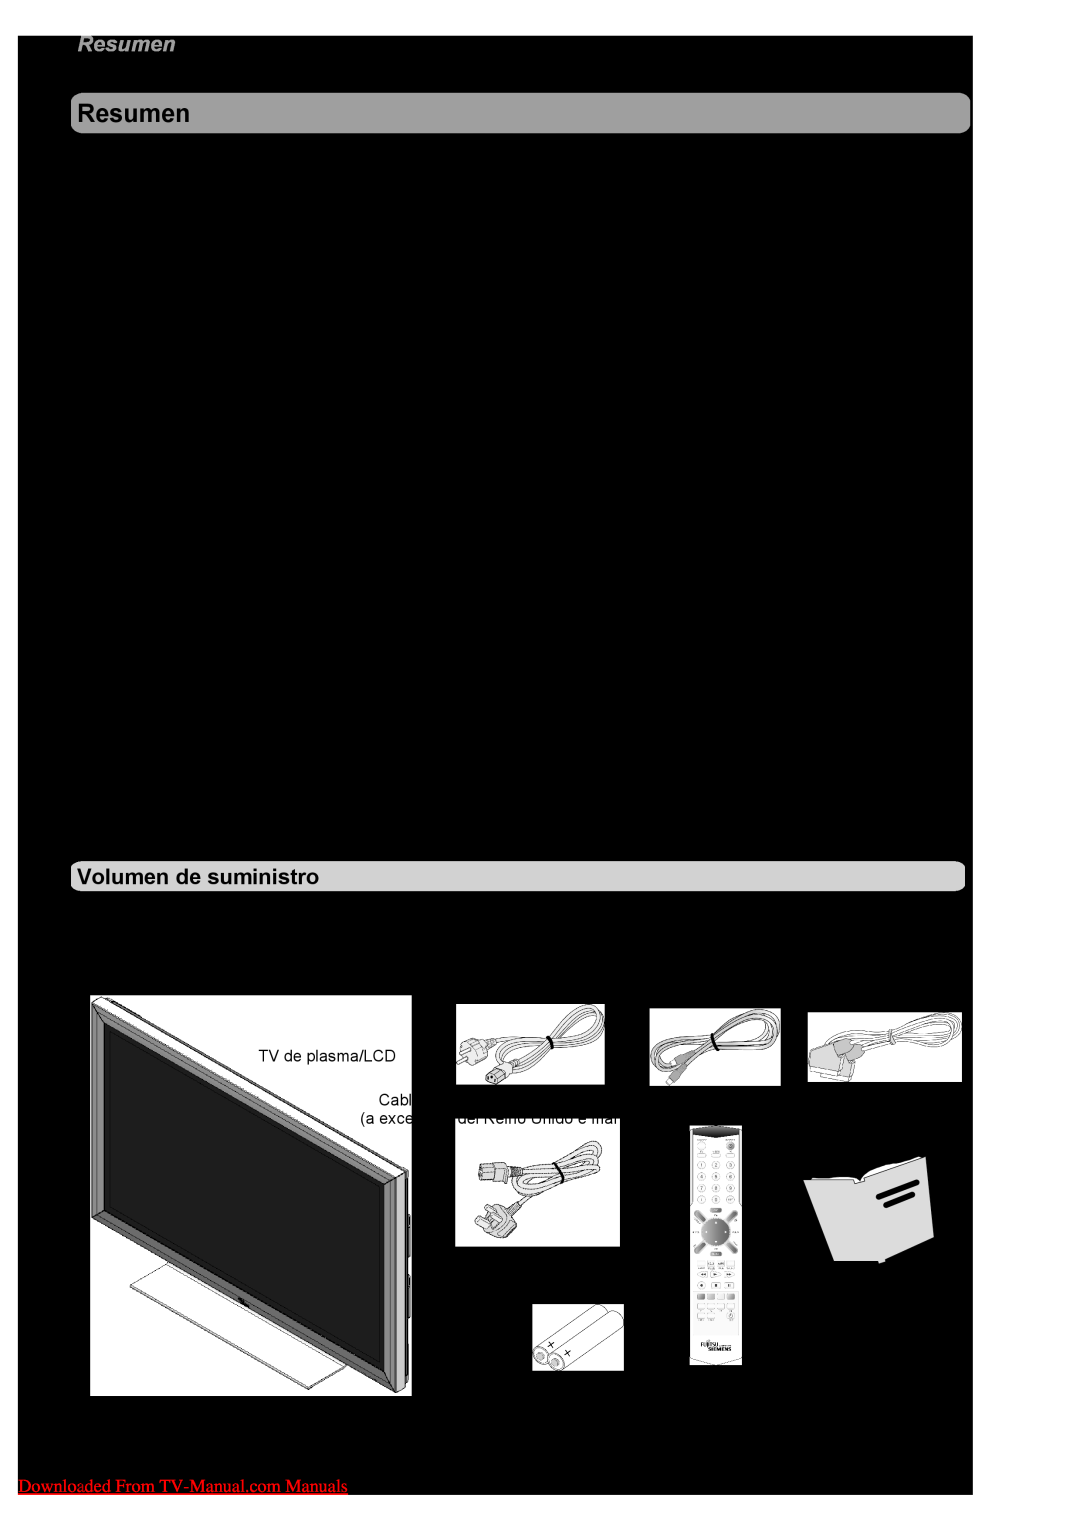 Fujitsu PQ50-1, PQ42-1, VQ40-1 manual Resumen, Volumen de suministro, Equipamiento, From TV-Manual.com Manuals, Downloaded4 